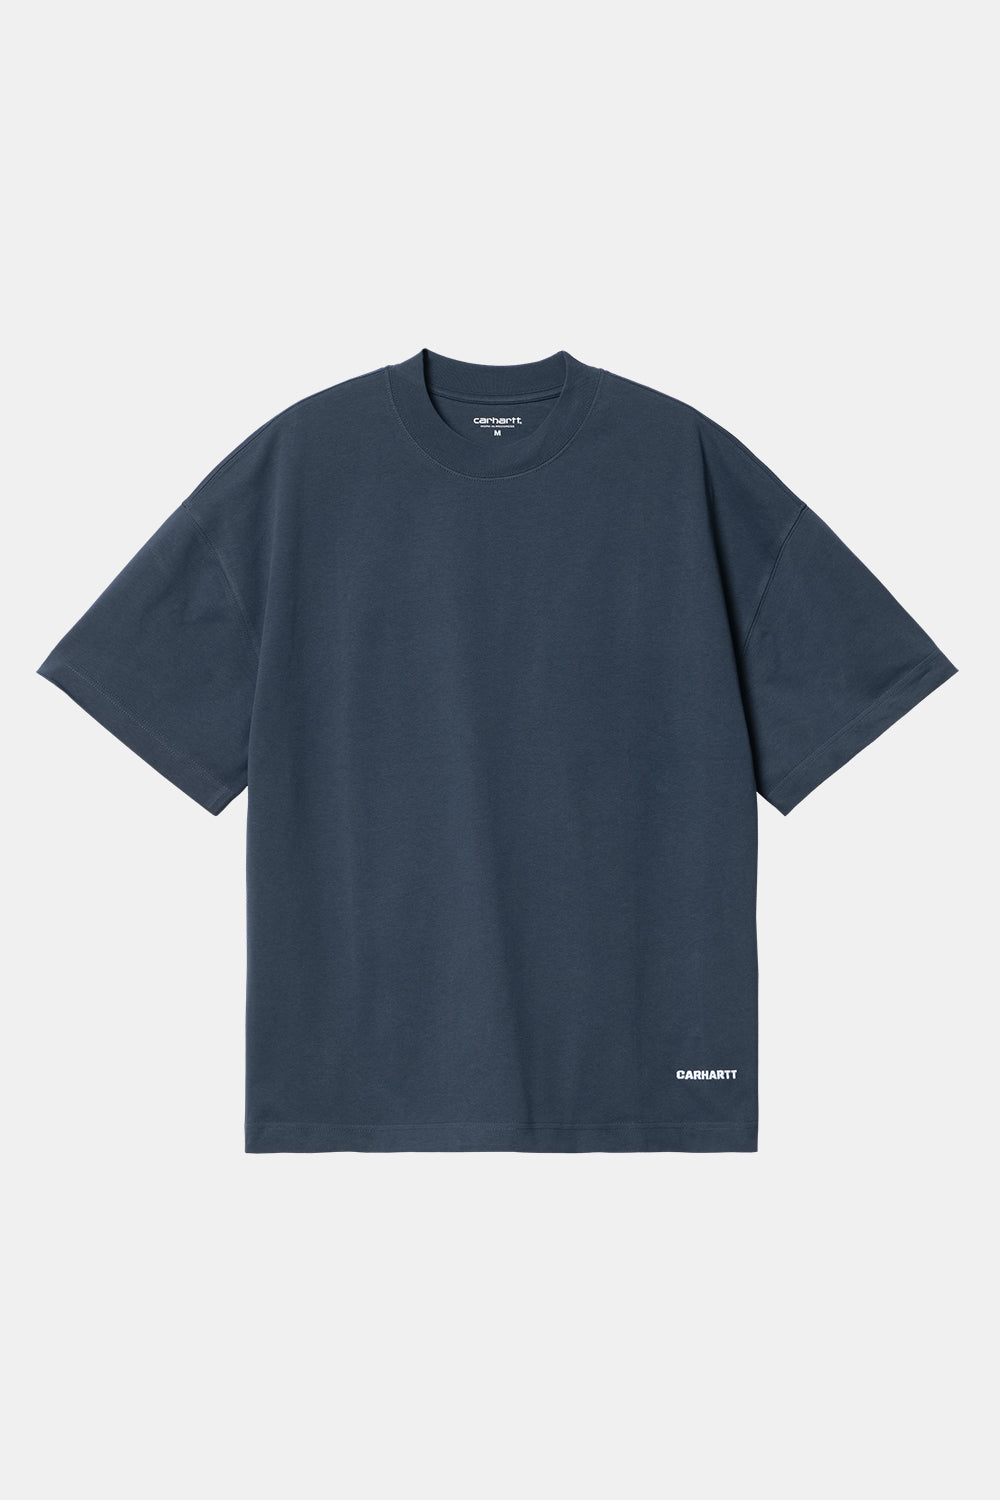 Carhartt Short Sleeve Script T-Shirt (Blue/White)
